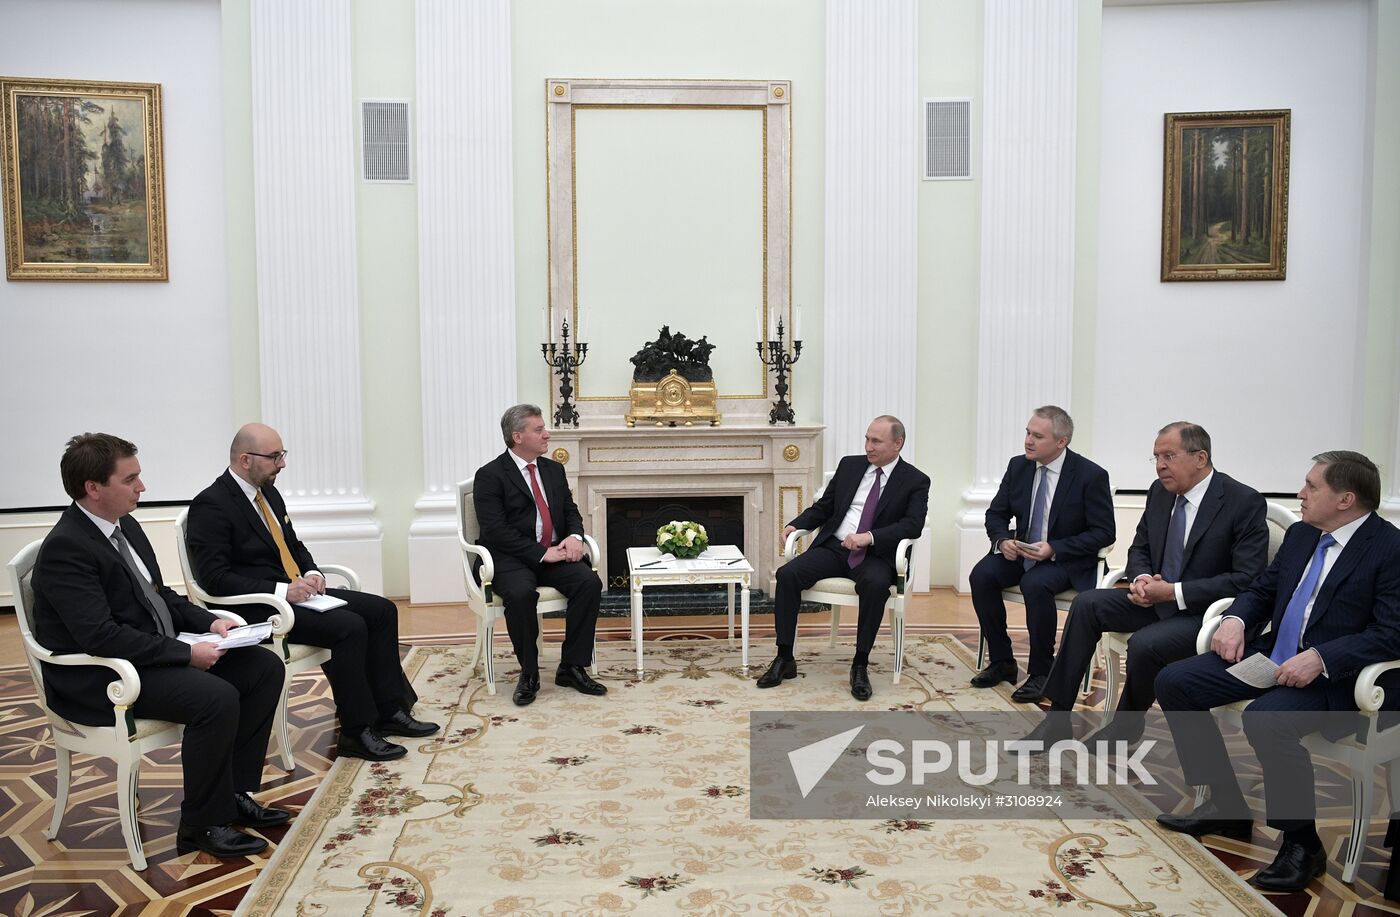 President Vladimir Putin meets with President of Macedonia Gjorge Ivanov